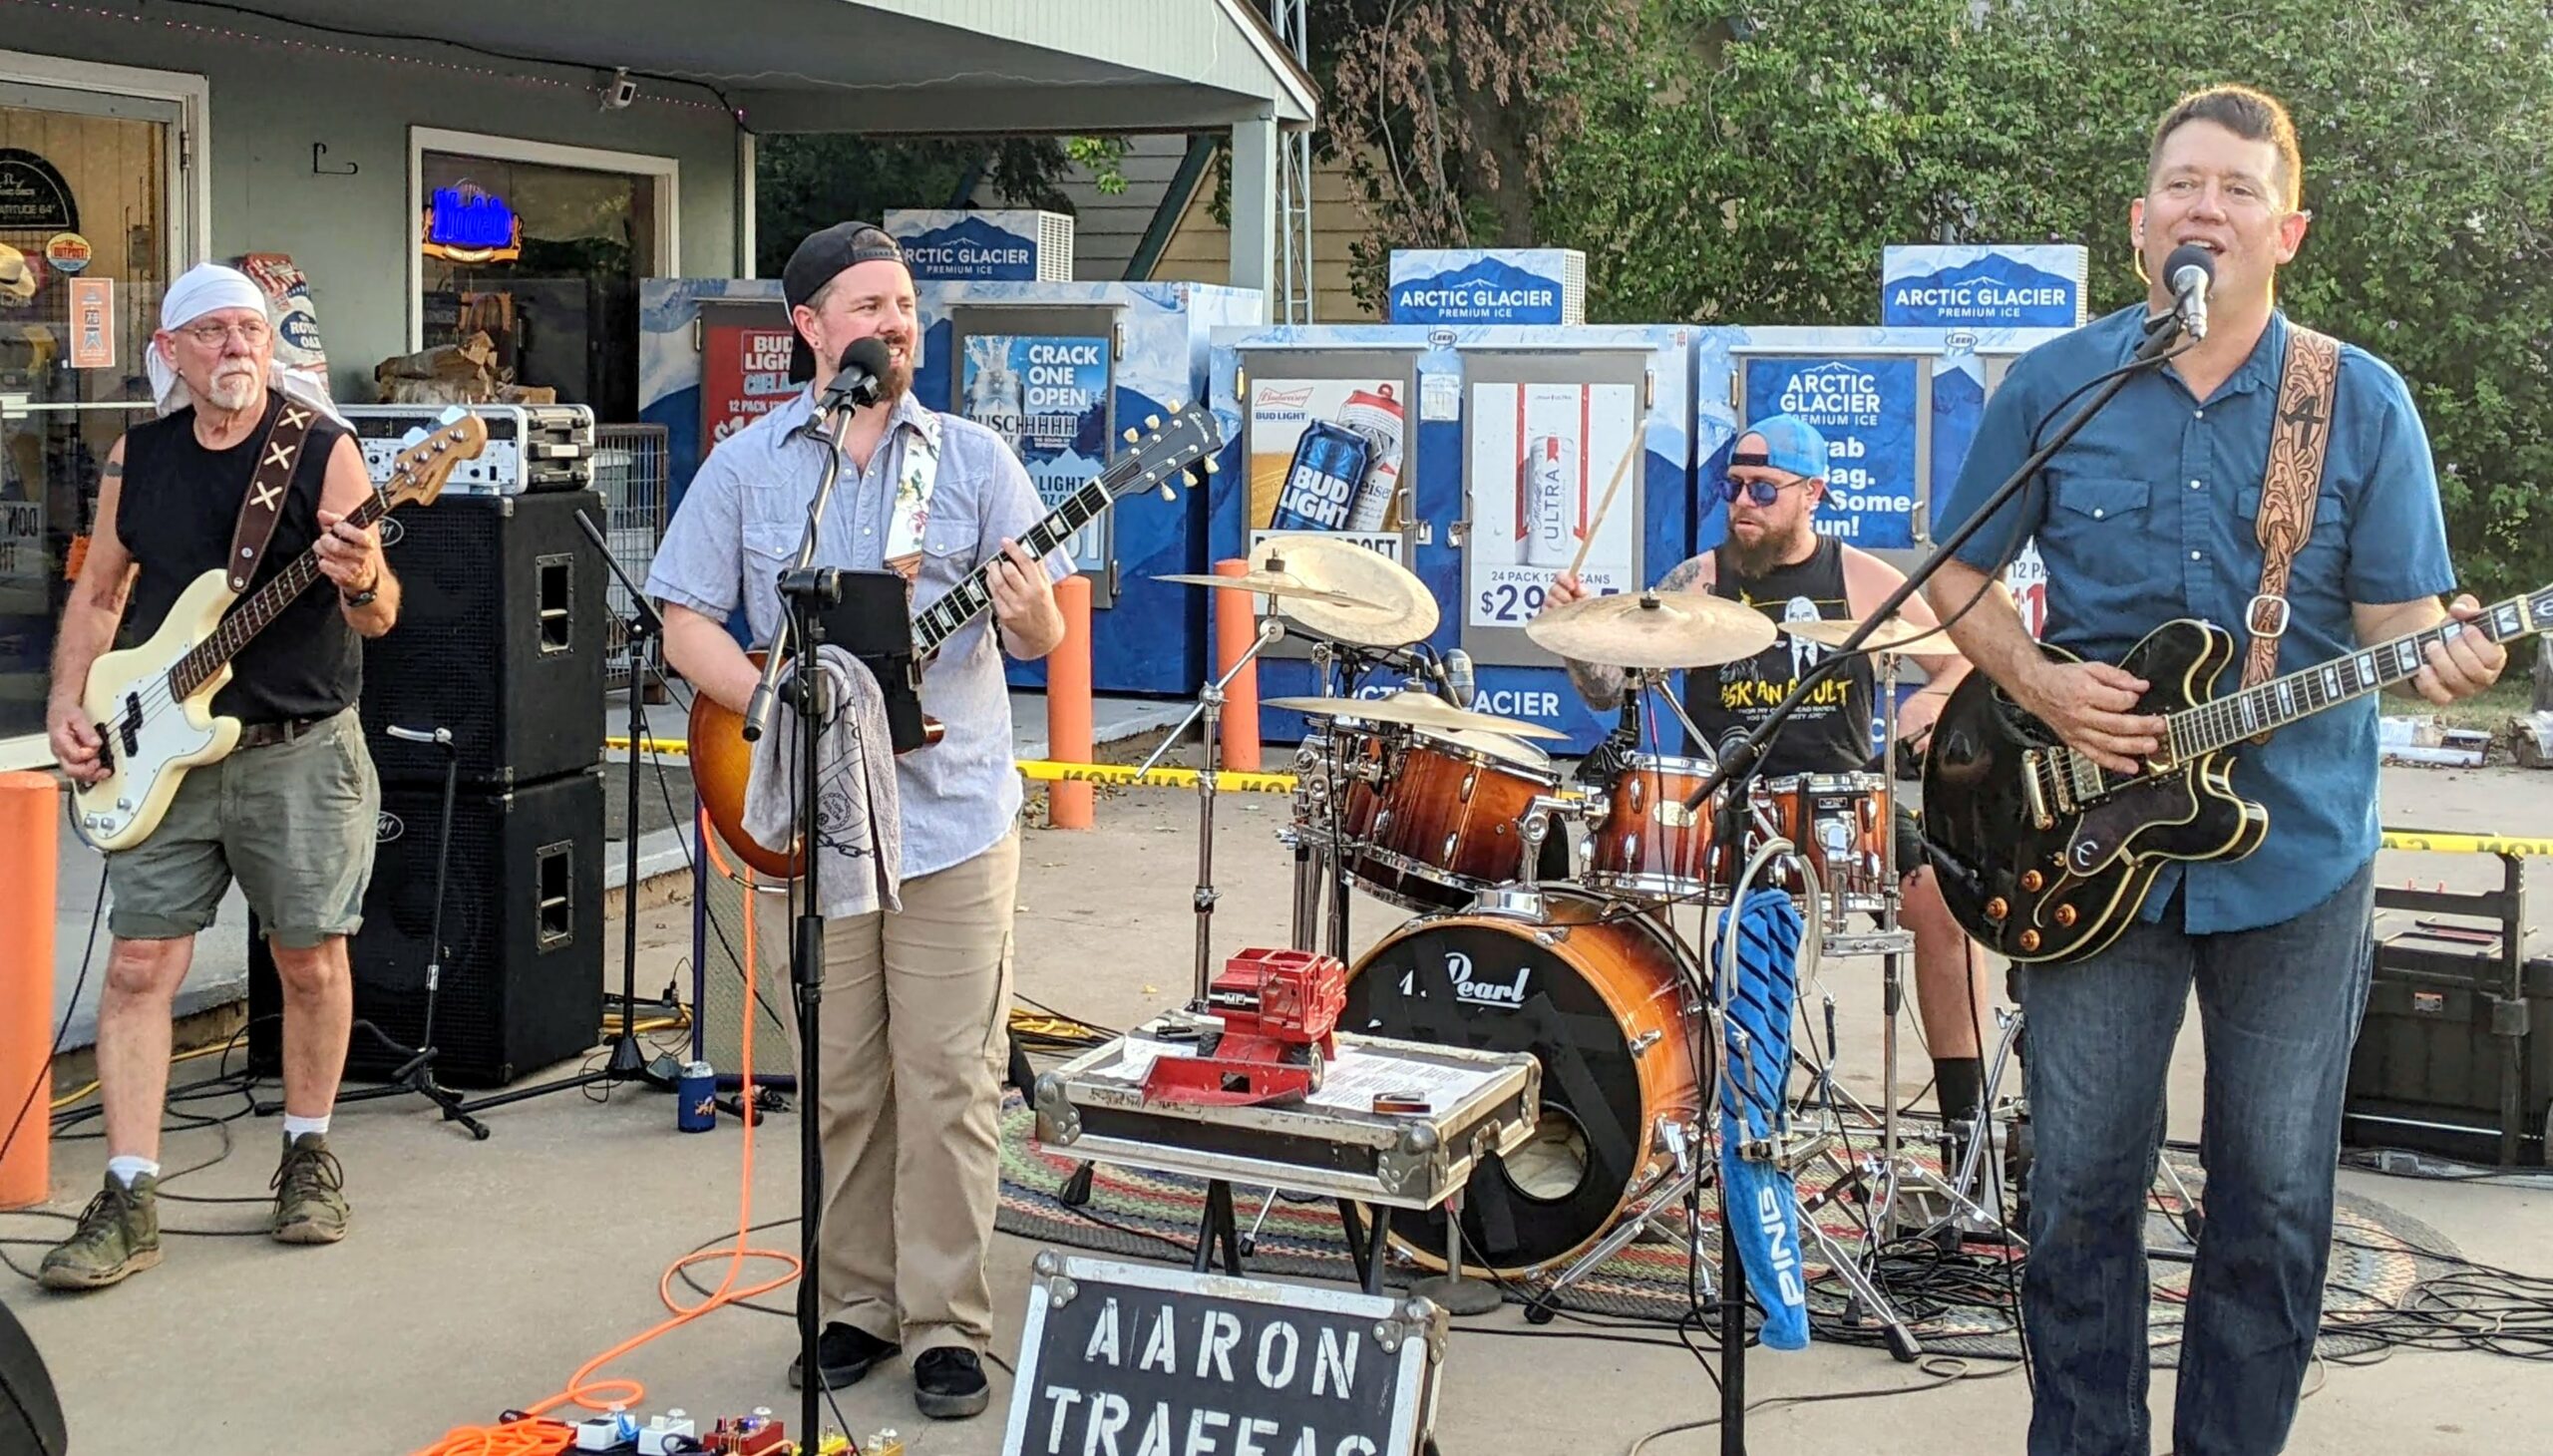 Aaron Traffas Band plays original Kansas country music in Cheney